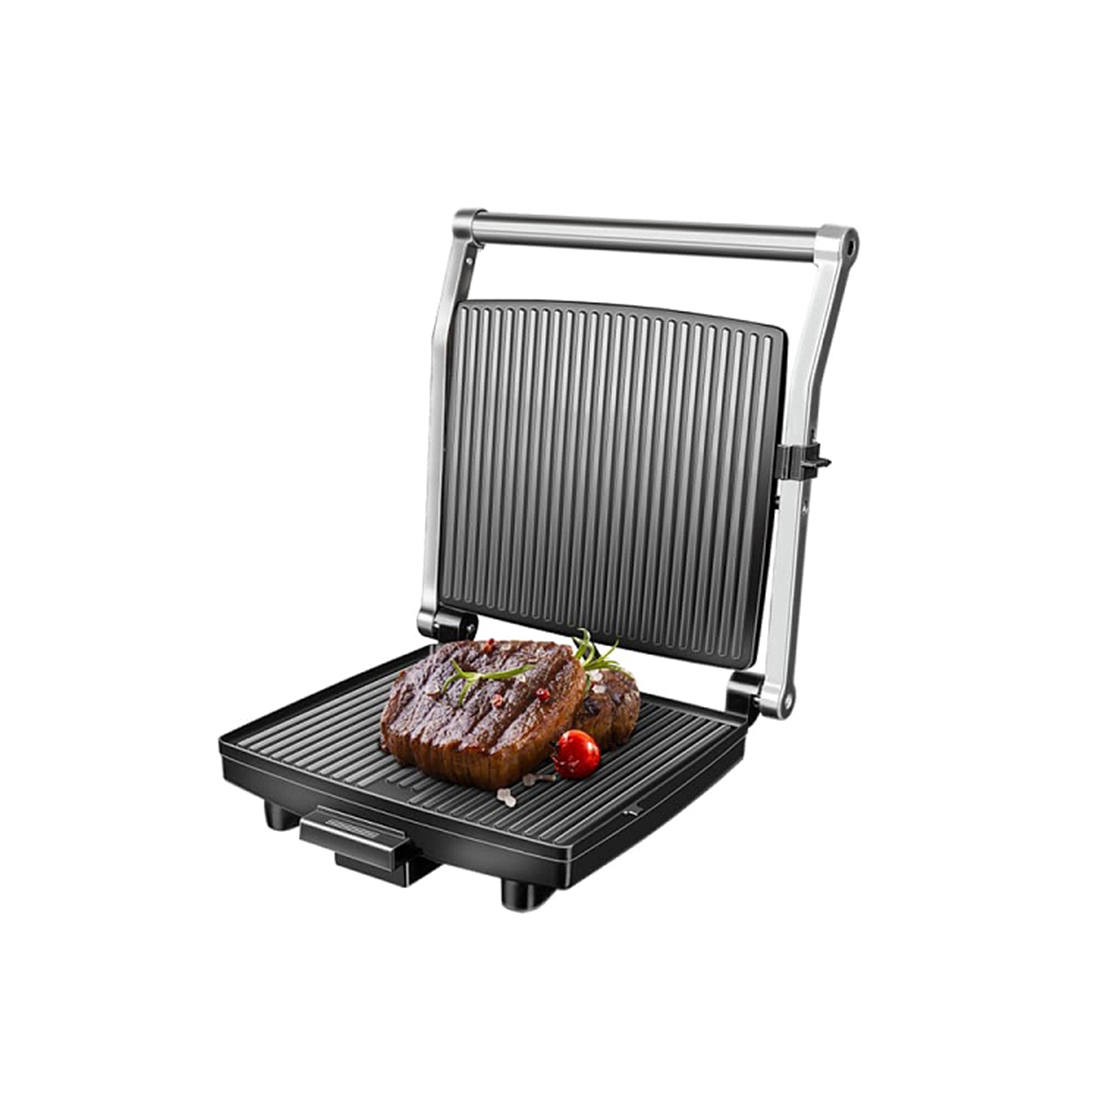 Гриль-духовка, REDMOND, Steak&Bake RGM-M803P, 1800 Вт, Материал корпуса металл/пластик, Тип покрытия